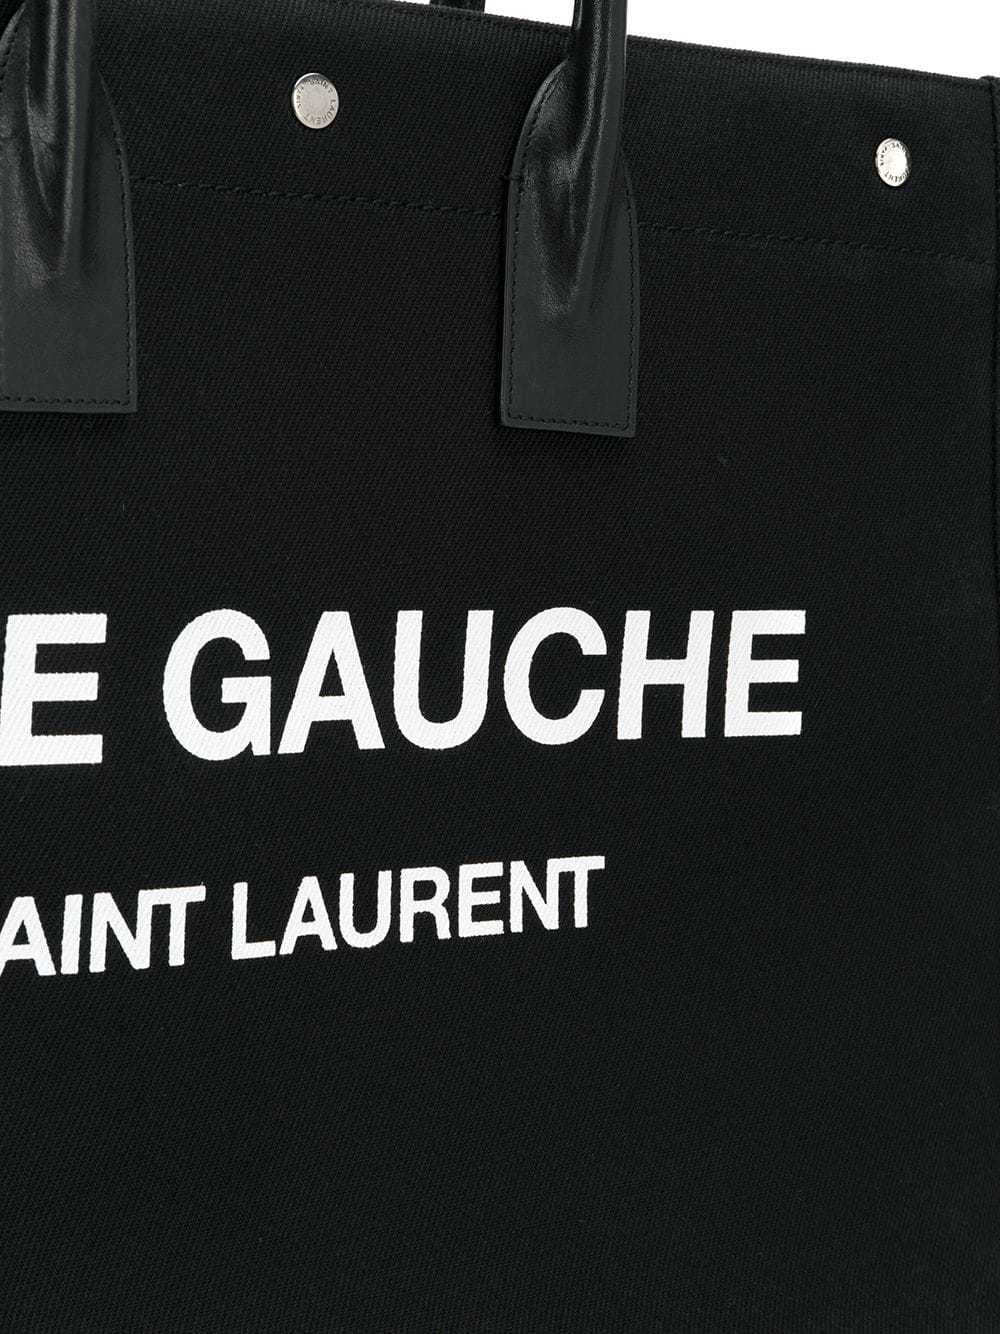 SAINT LAURENT: Noe Rive Gauche tote bag in canvas - White